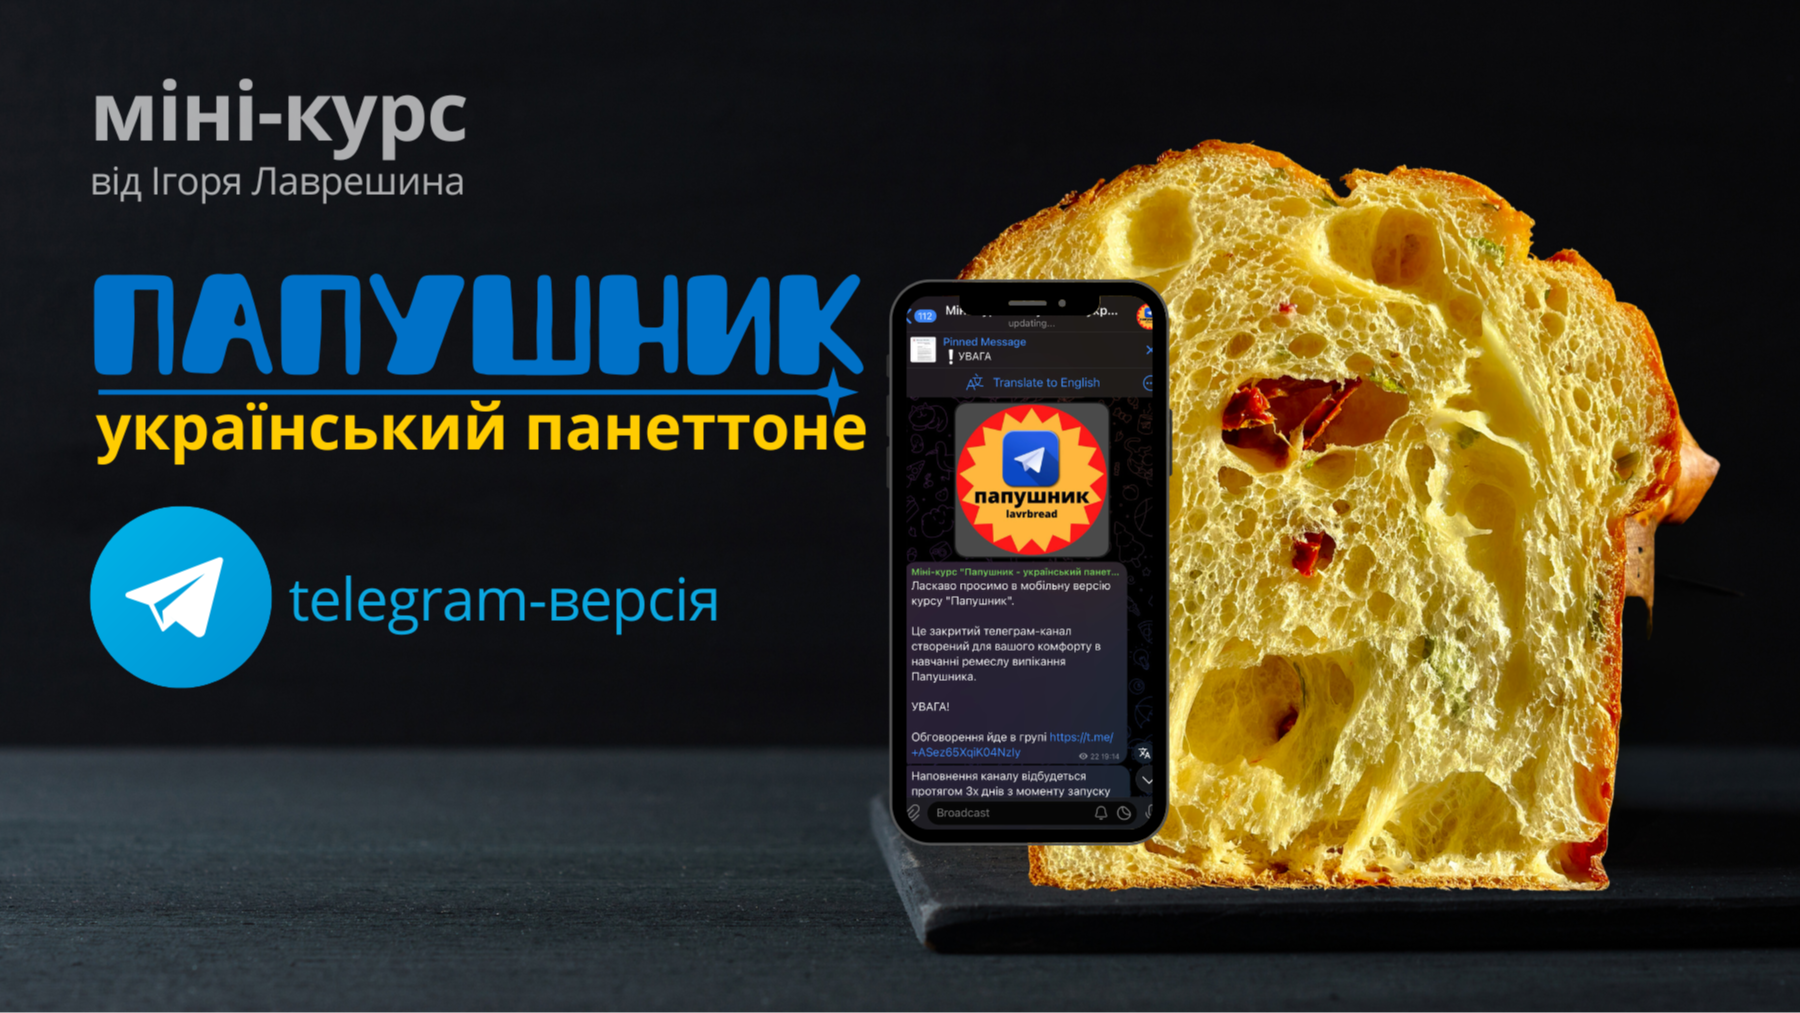 Telegram-курс "Папушник - український панеттоне"